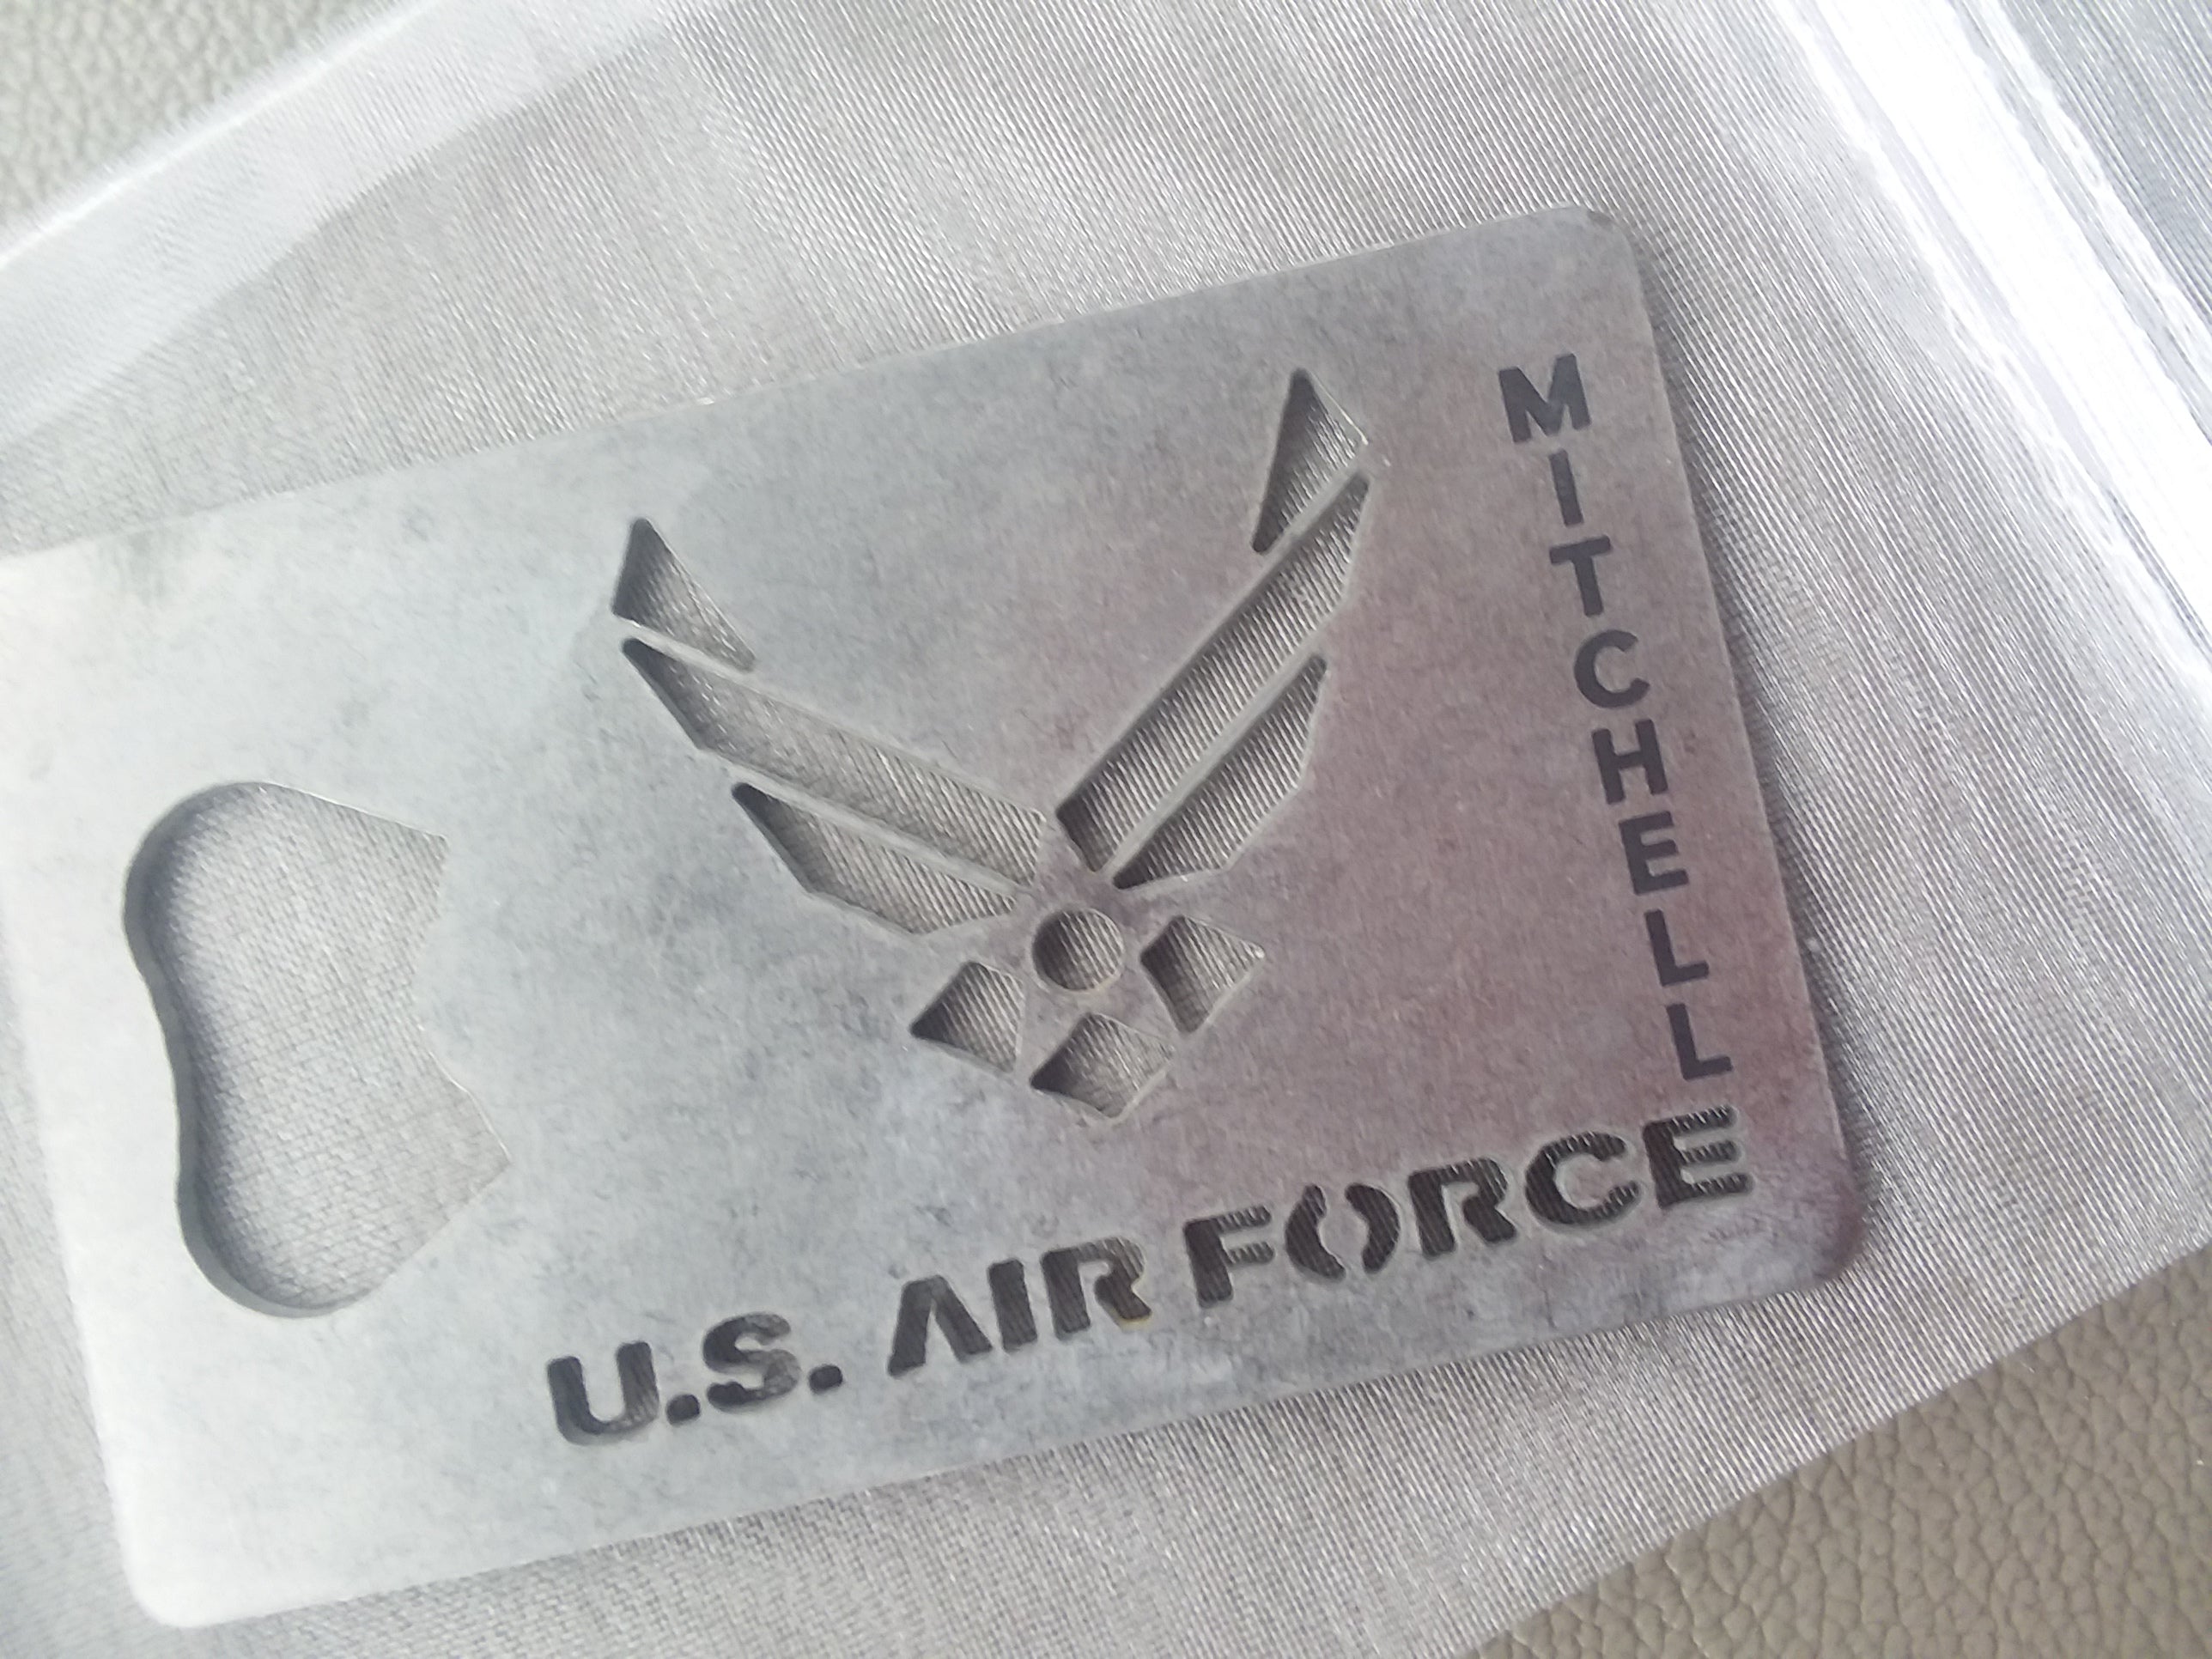 U.S. Air Force Credit Card Bottle Opener